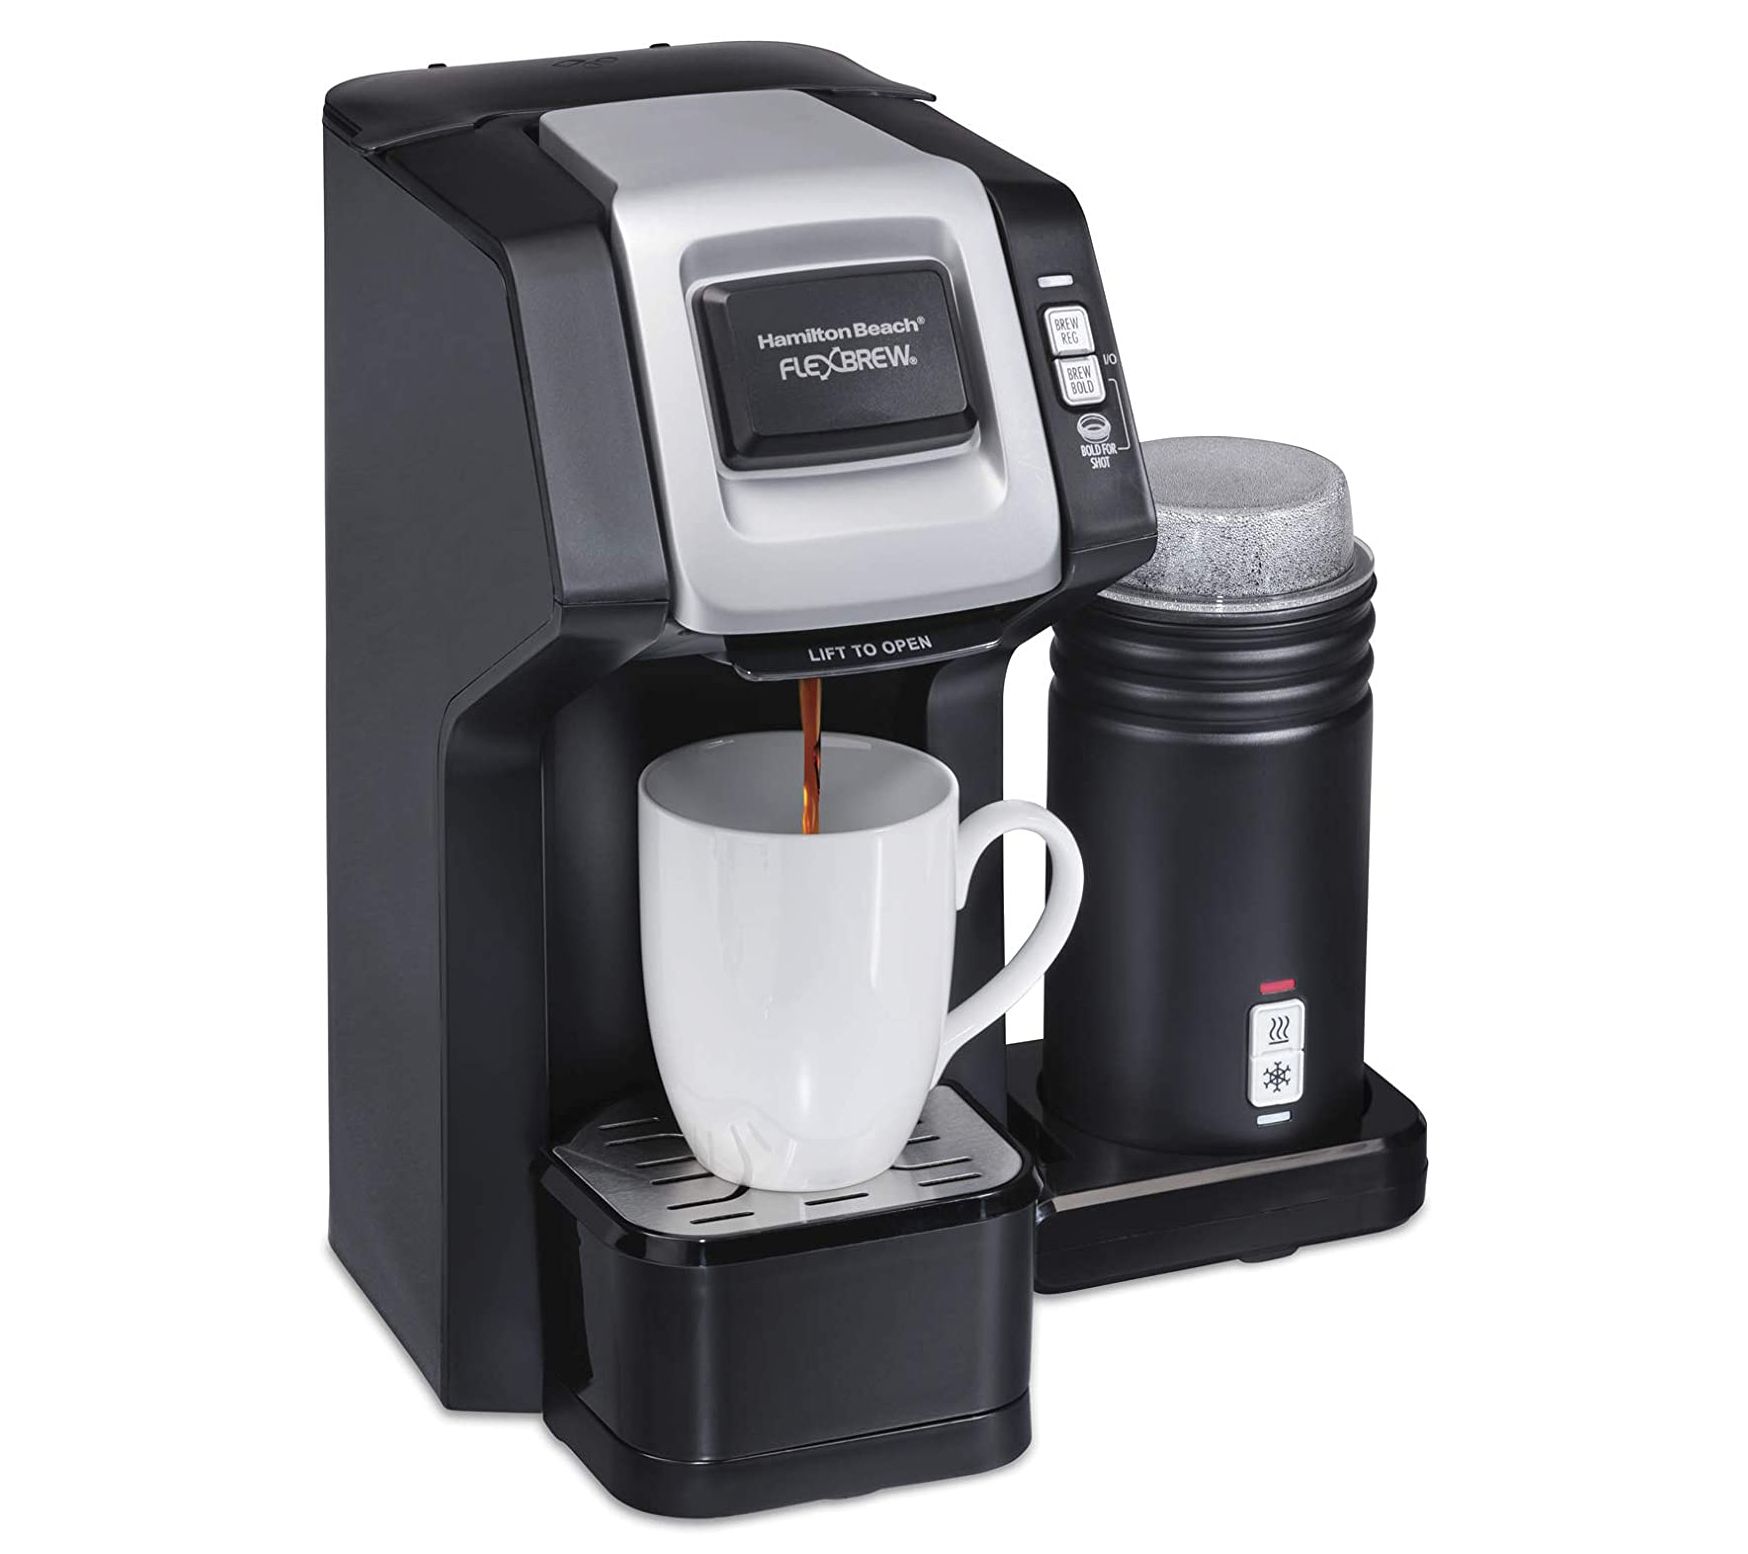 Top-rated Ninja Kitchen Appliances  sale: Auto-iQ Coffee Maker $100  (Reg. $150), more